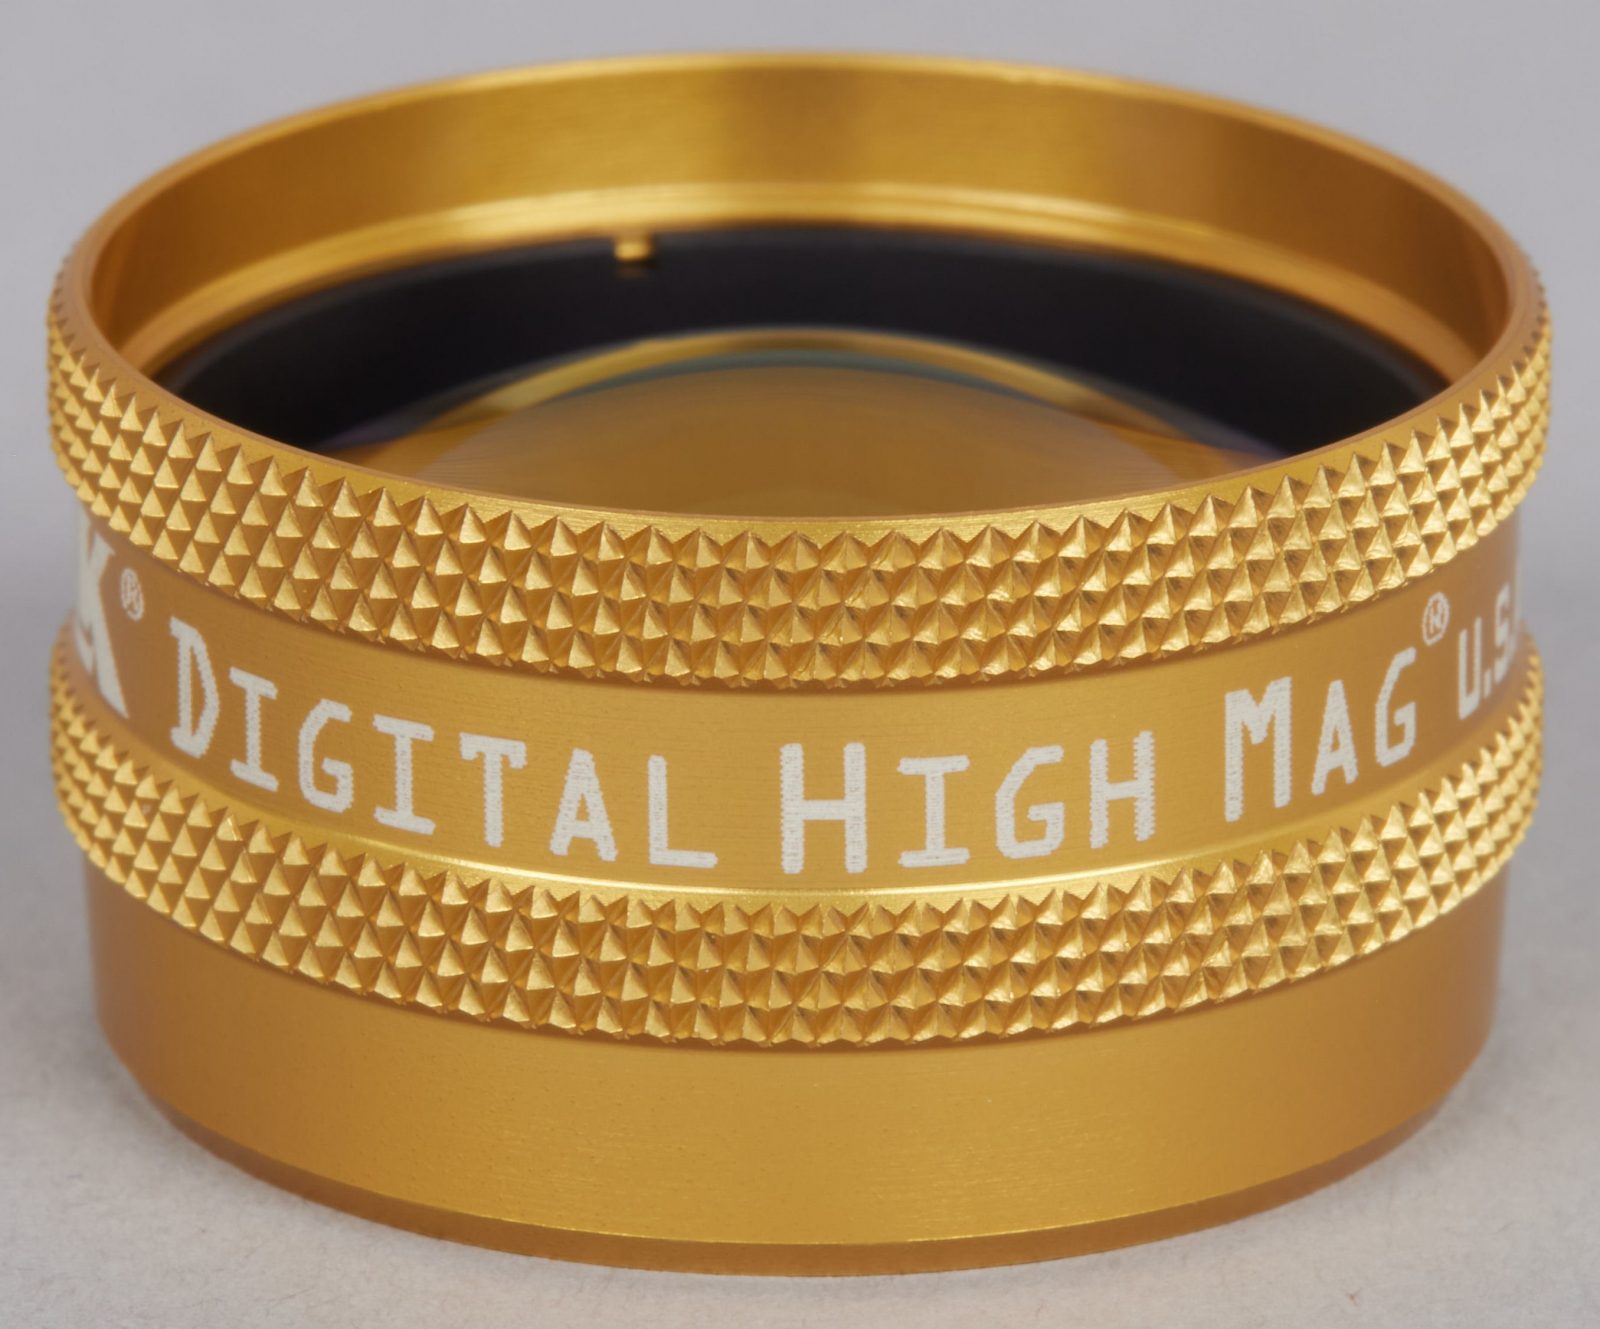 Digital High Mag® (Gold Ring)